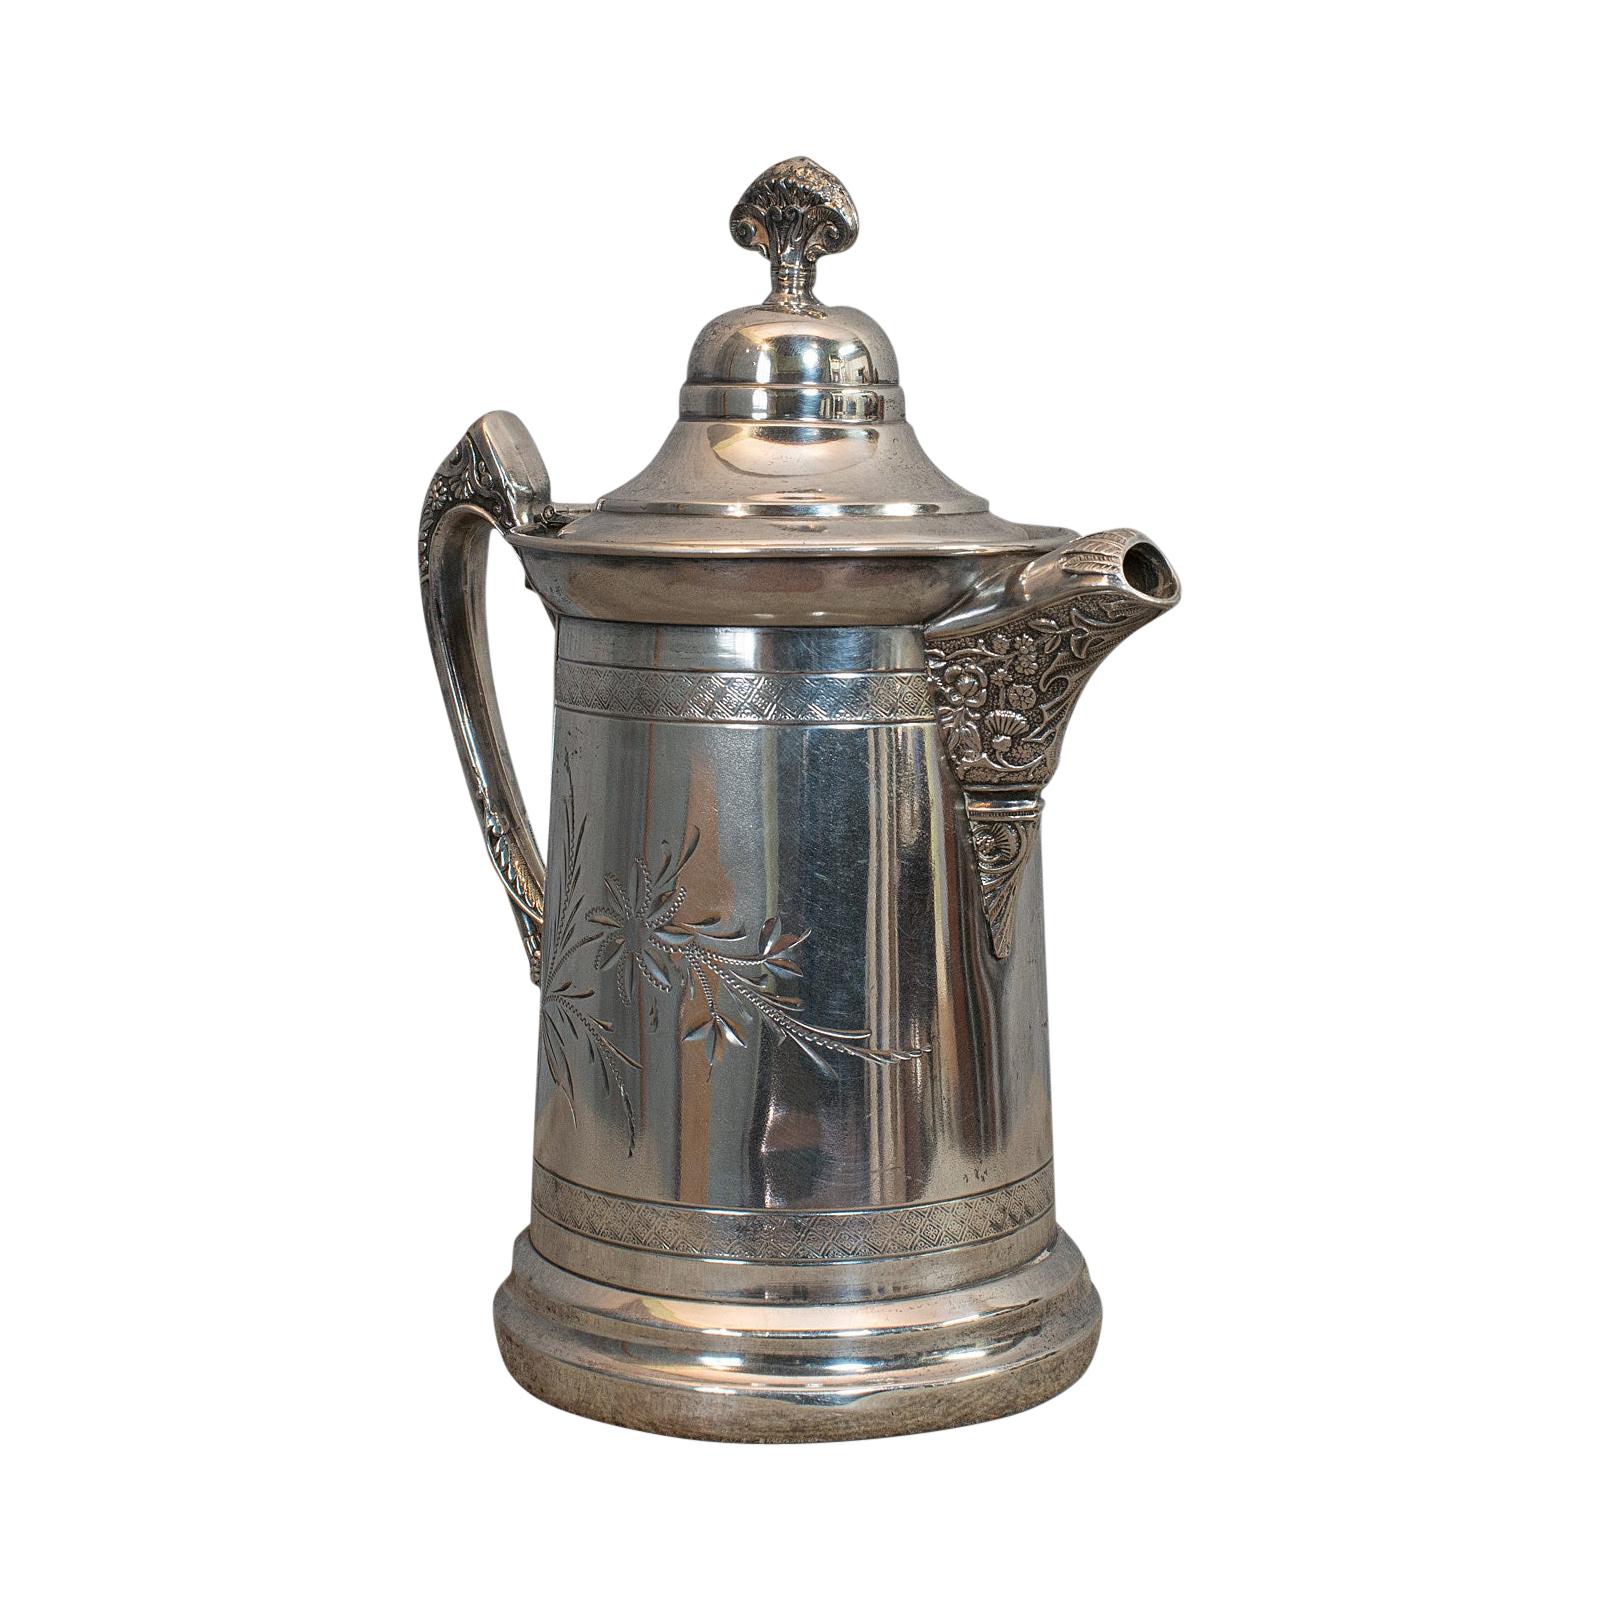 Antique Coffee Pot, English Silver Plate, Beverage Jug, 19th Century, circa 1900